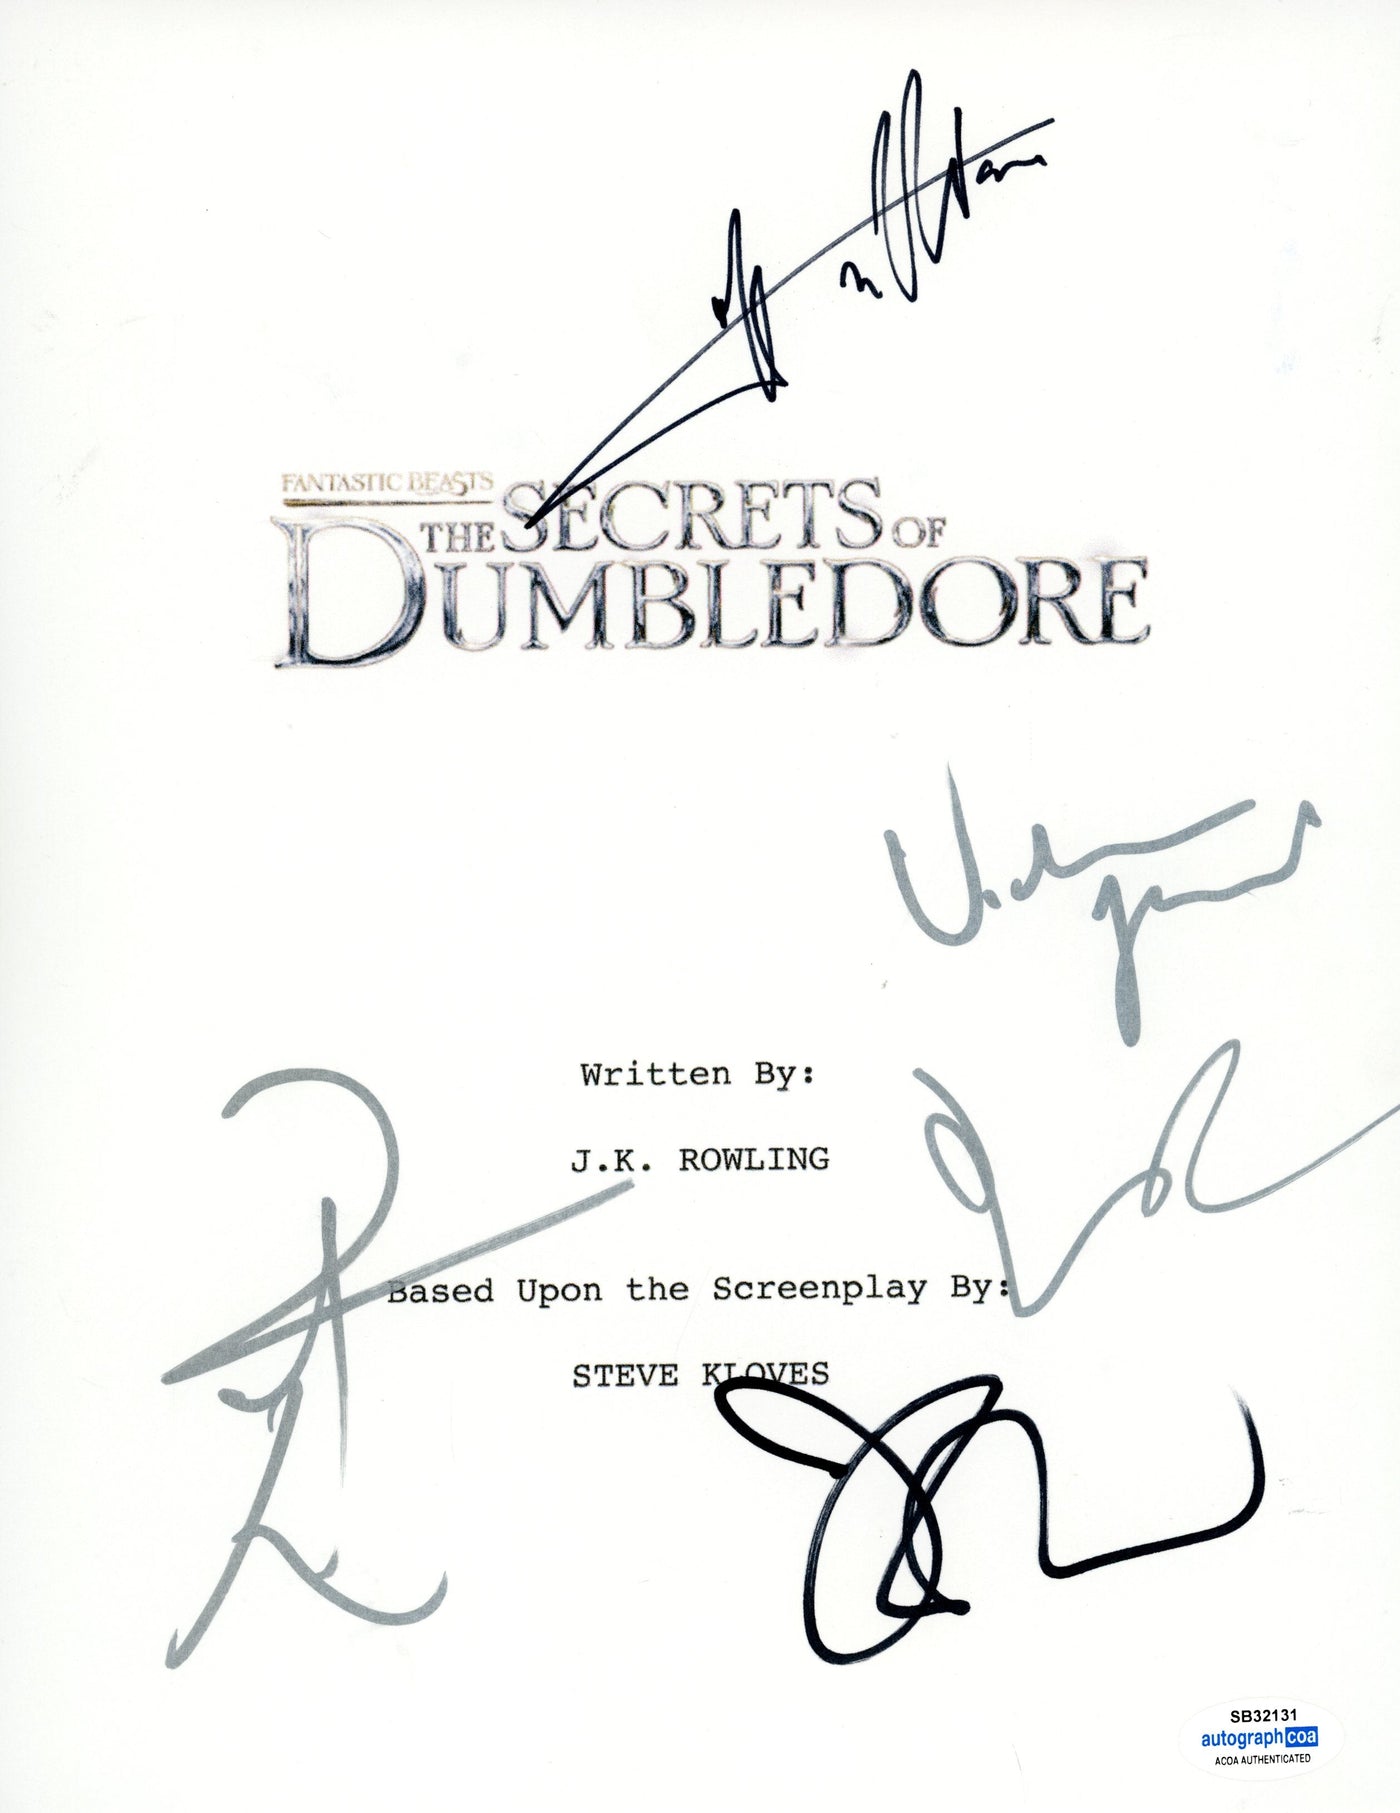 Fantastic Beasts Cast Eddie Redmayne Signed Script Cover Autographed ACOA 3